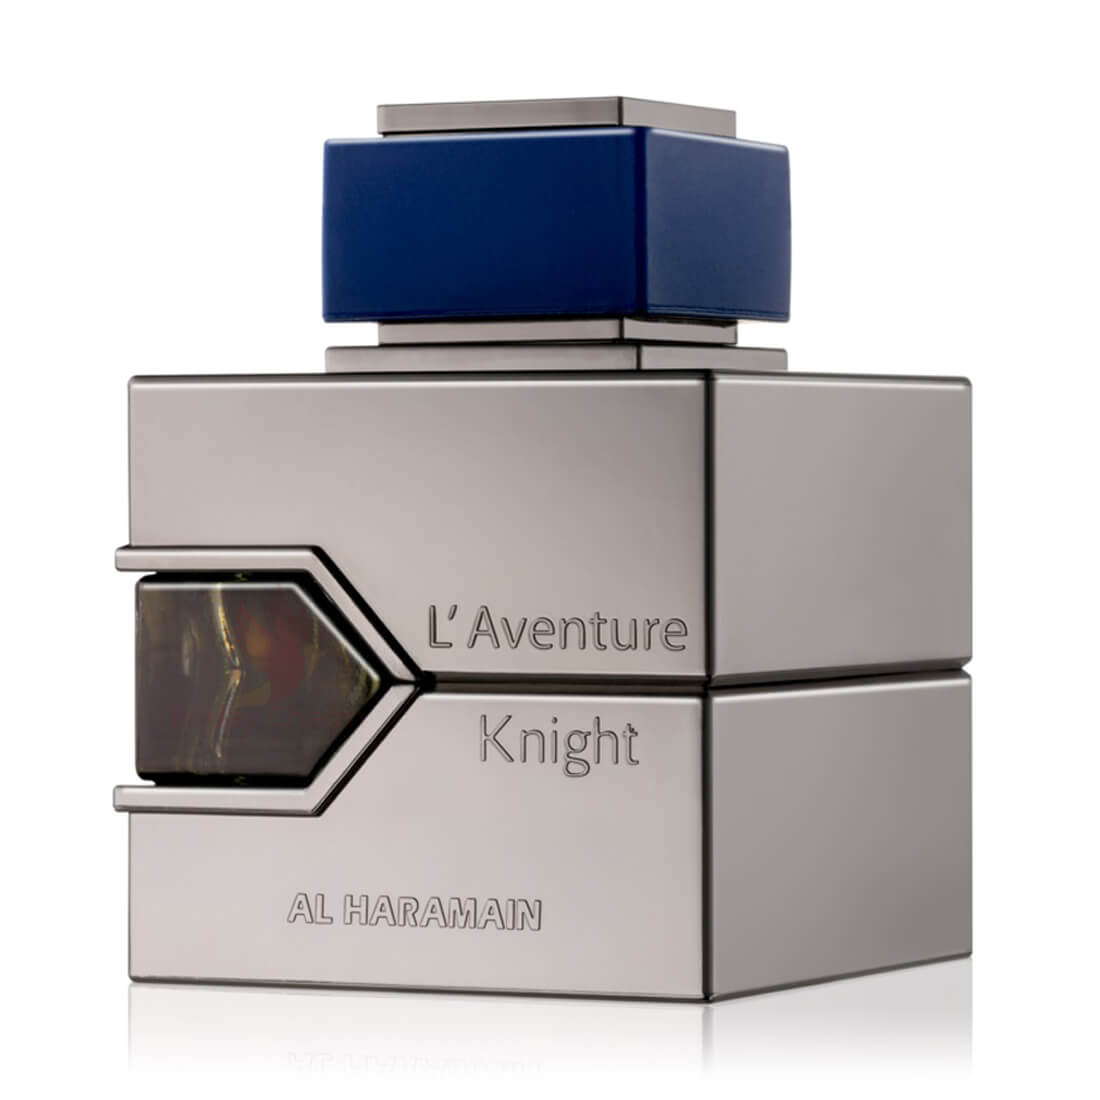 Al Haramain L’Aventure Knight Eau De Perfume Spray - 100ml